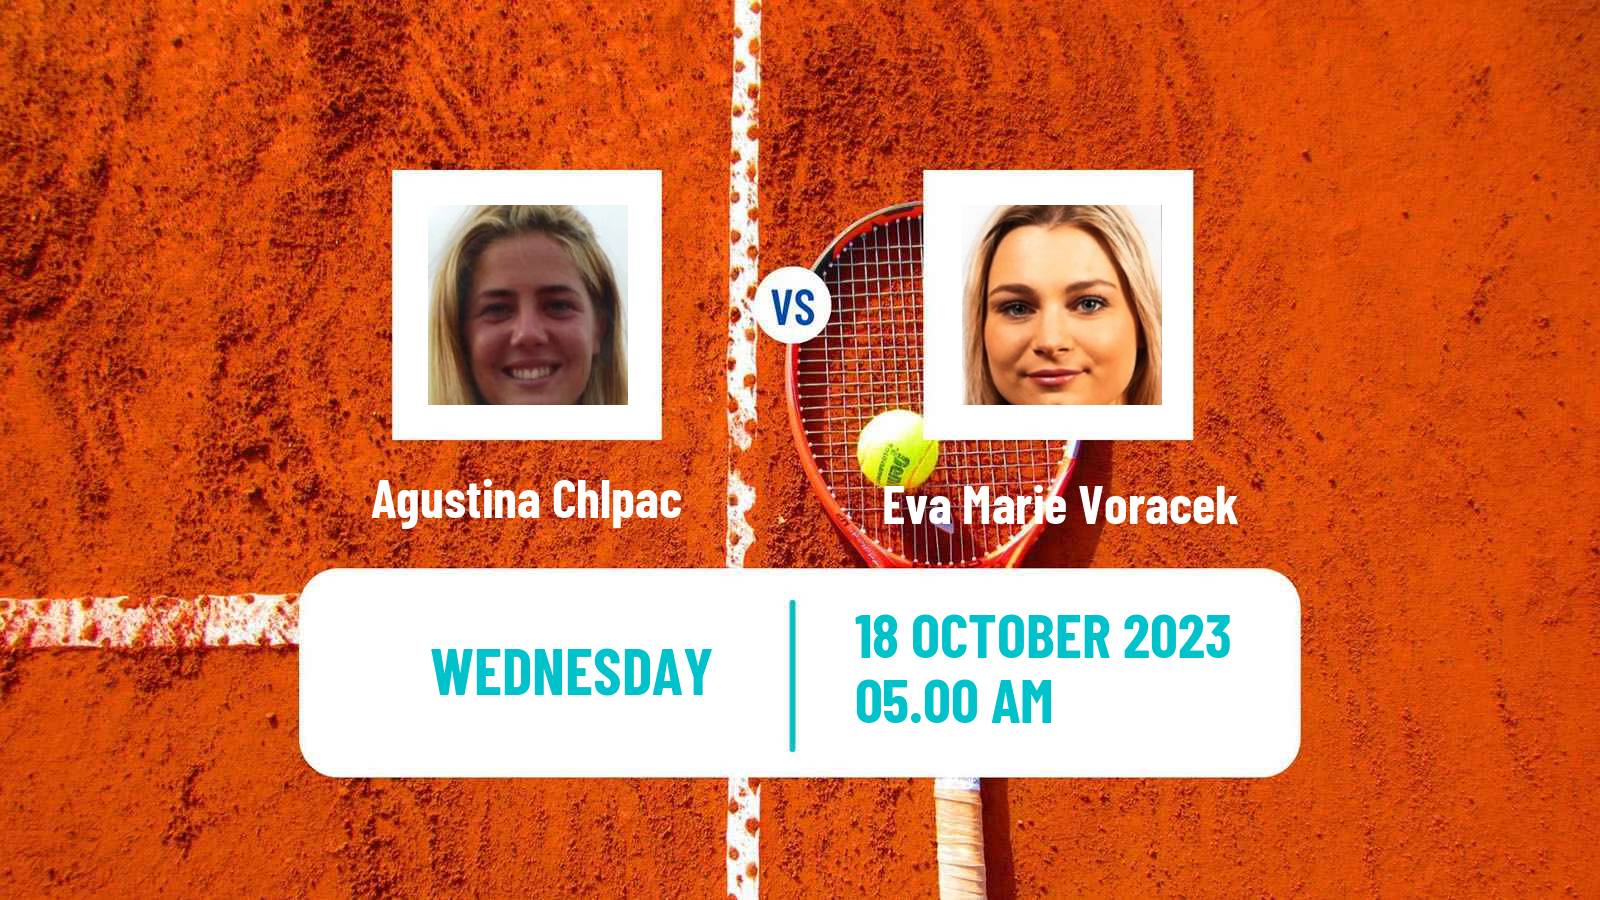 Tennis ITF W15 Heraklion 3 Women Agustina Chlpac - Eva Marie Voracek